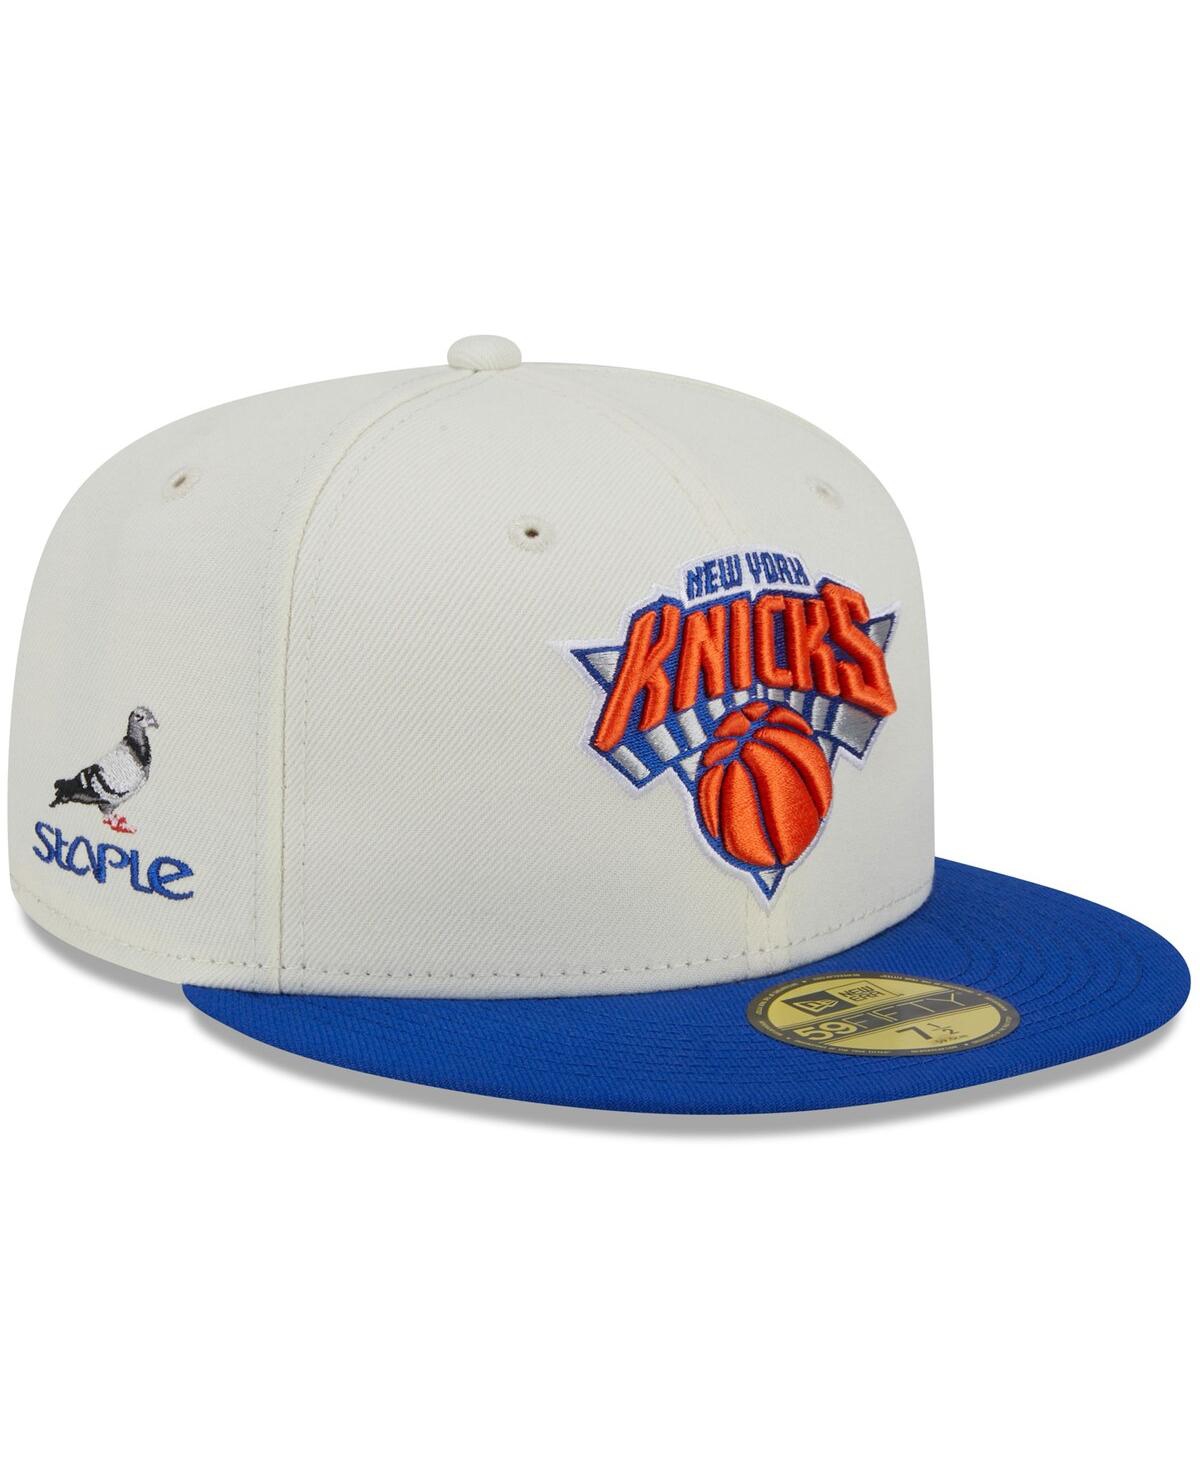 Men's New Era x Staple Cream, Blue New York Knicks Nba x Staple Two-Tone 59FIFTY Fitted Hat - Cream, Blue